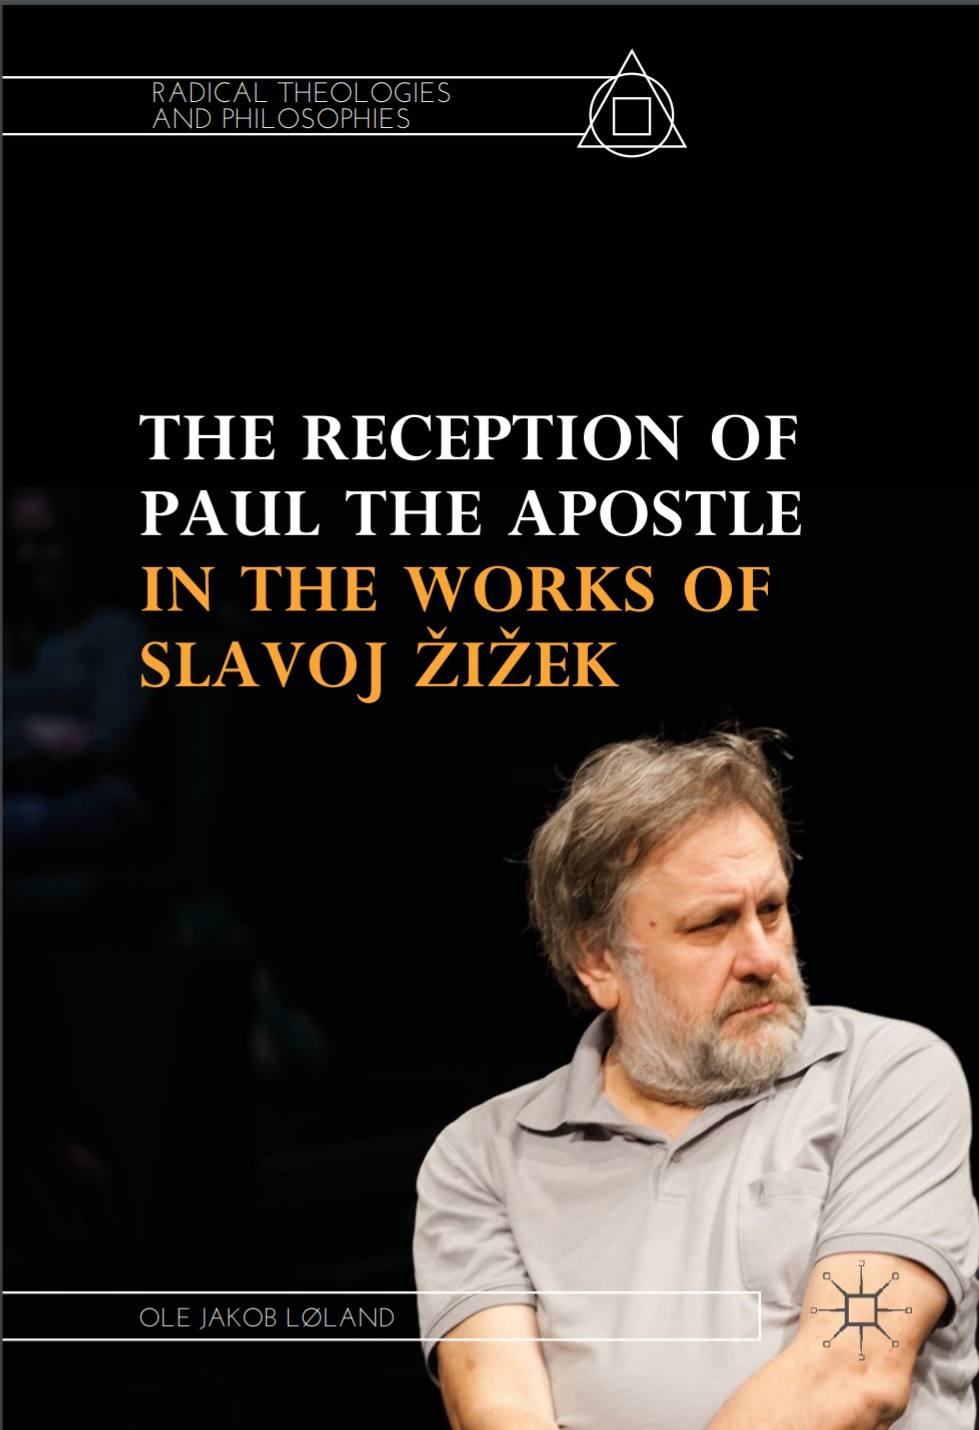 The-reception-of-paul-the-apostole-in-the-works-of-slavoj-zizek-theoryleaks.jpg